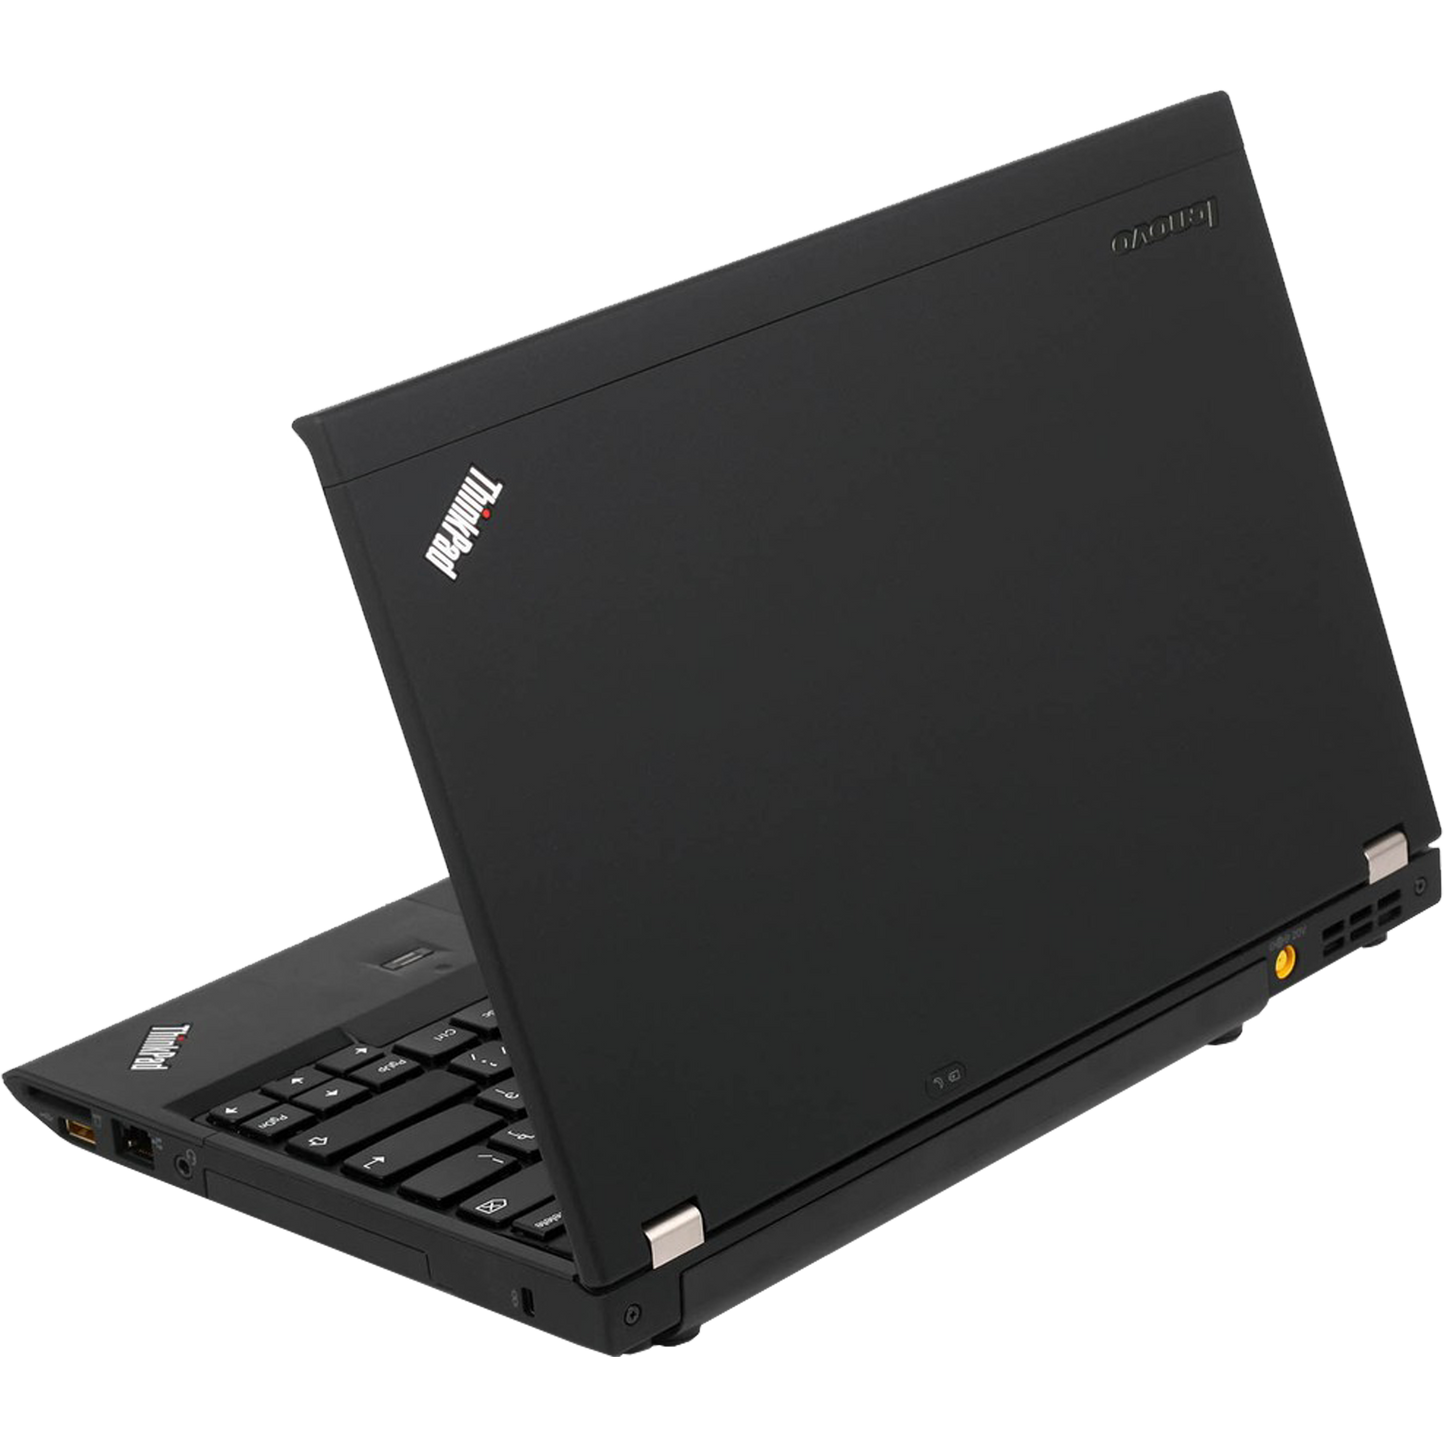 Lenovo ThinkPad X230 Intel i5, 3rd Gen Laptop with 8GB Ram Laptops - Refurbished